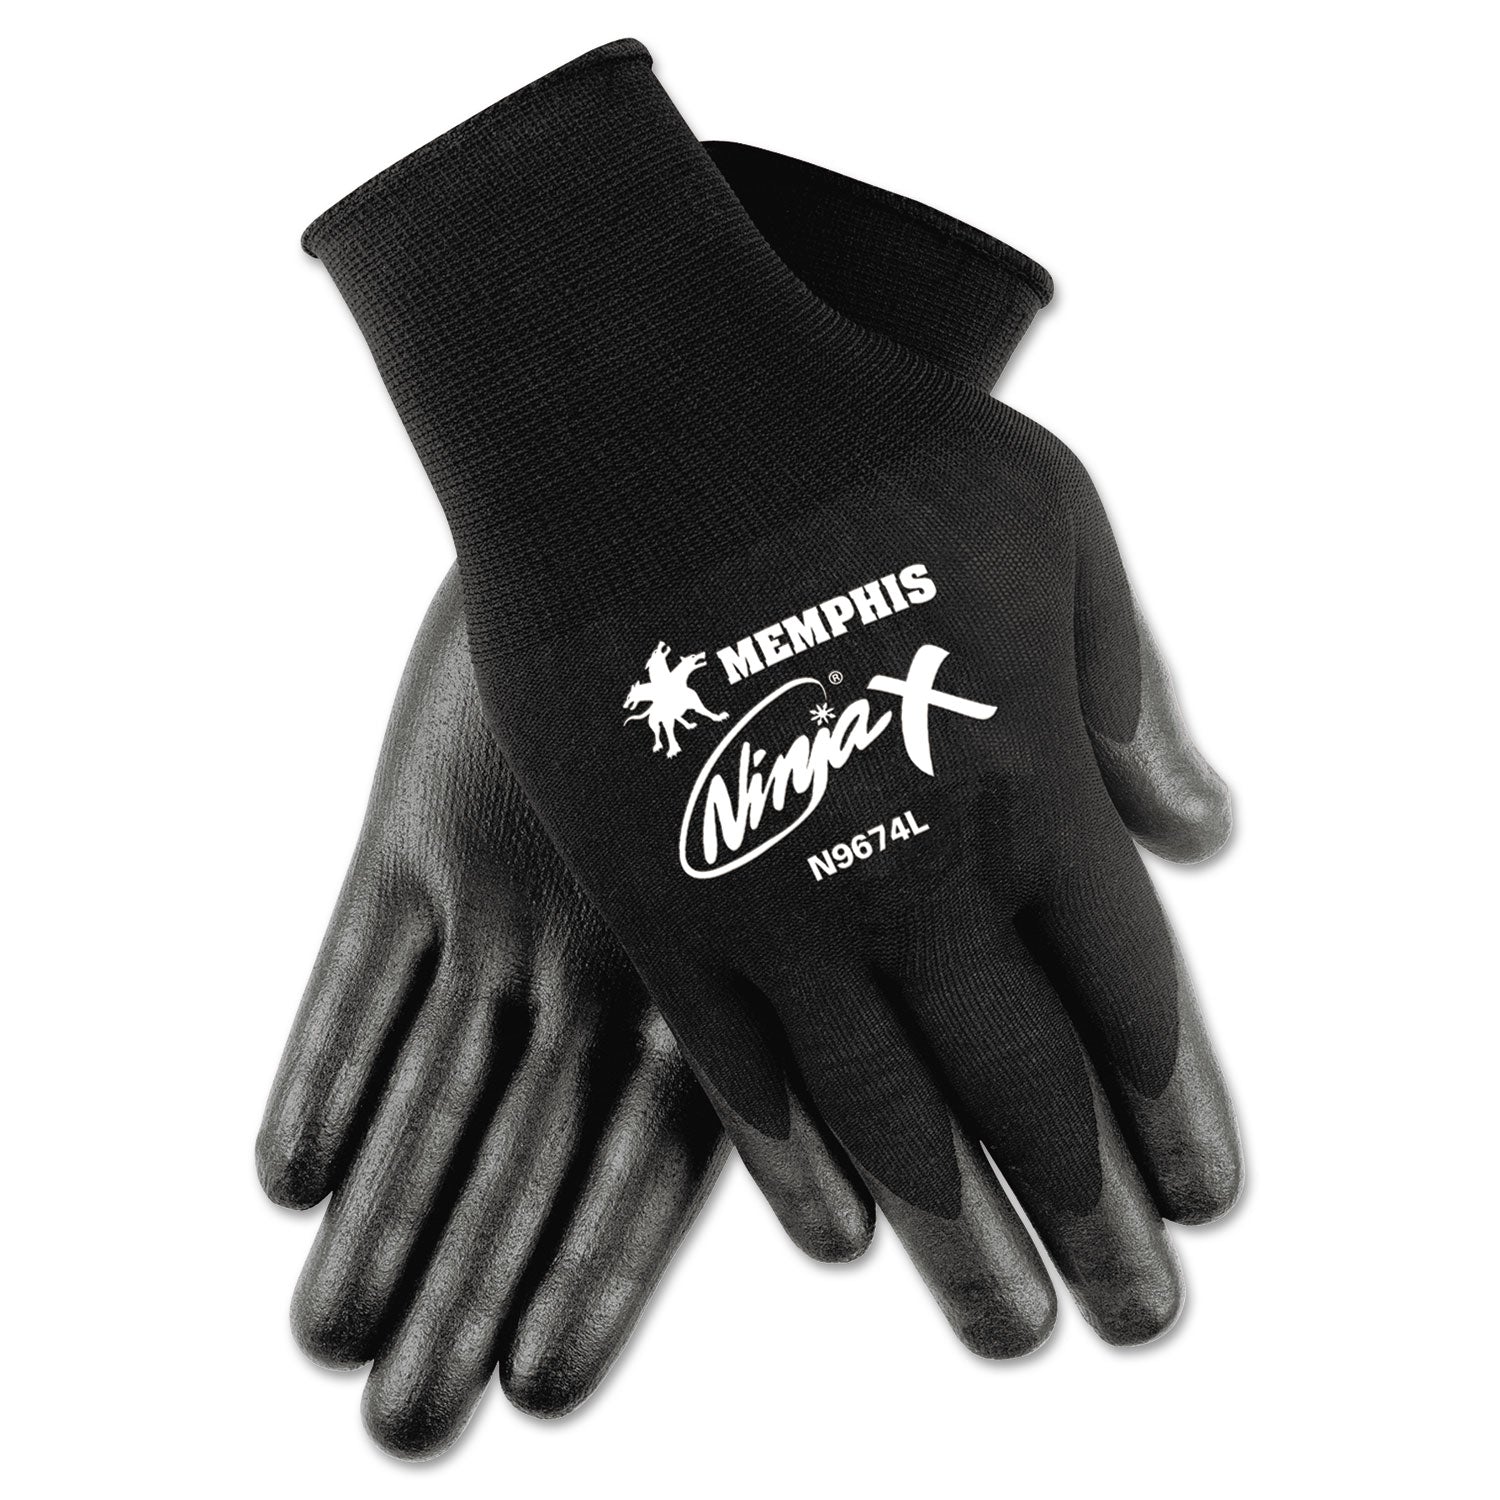 Ninja x Bi-Polymer Coated Gloves, X-Large, Black, Pair - 